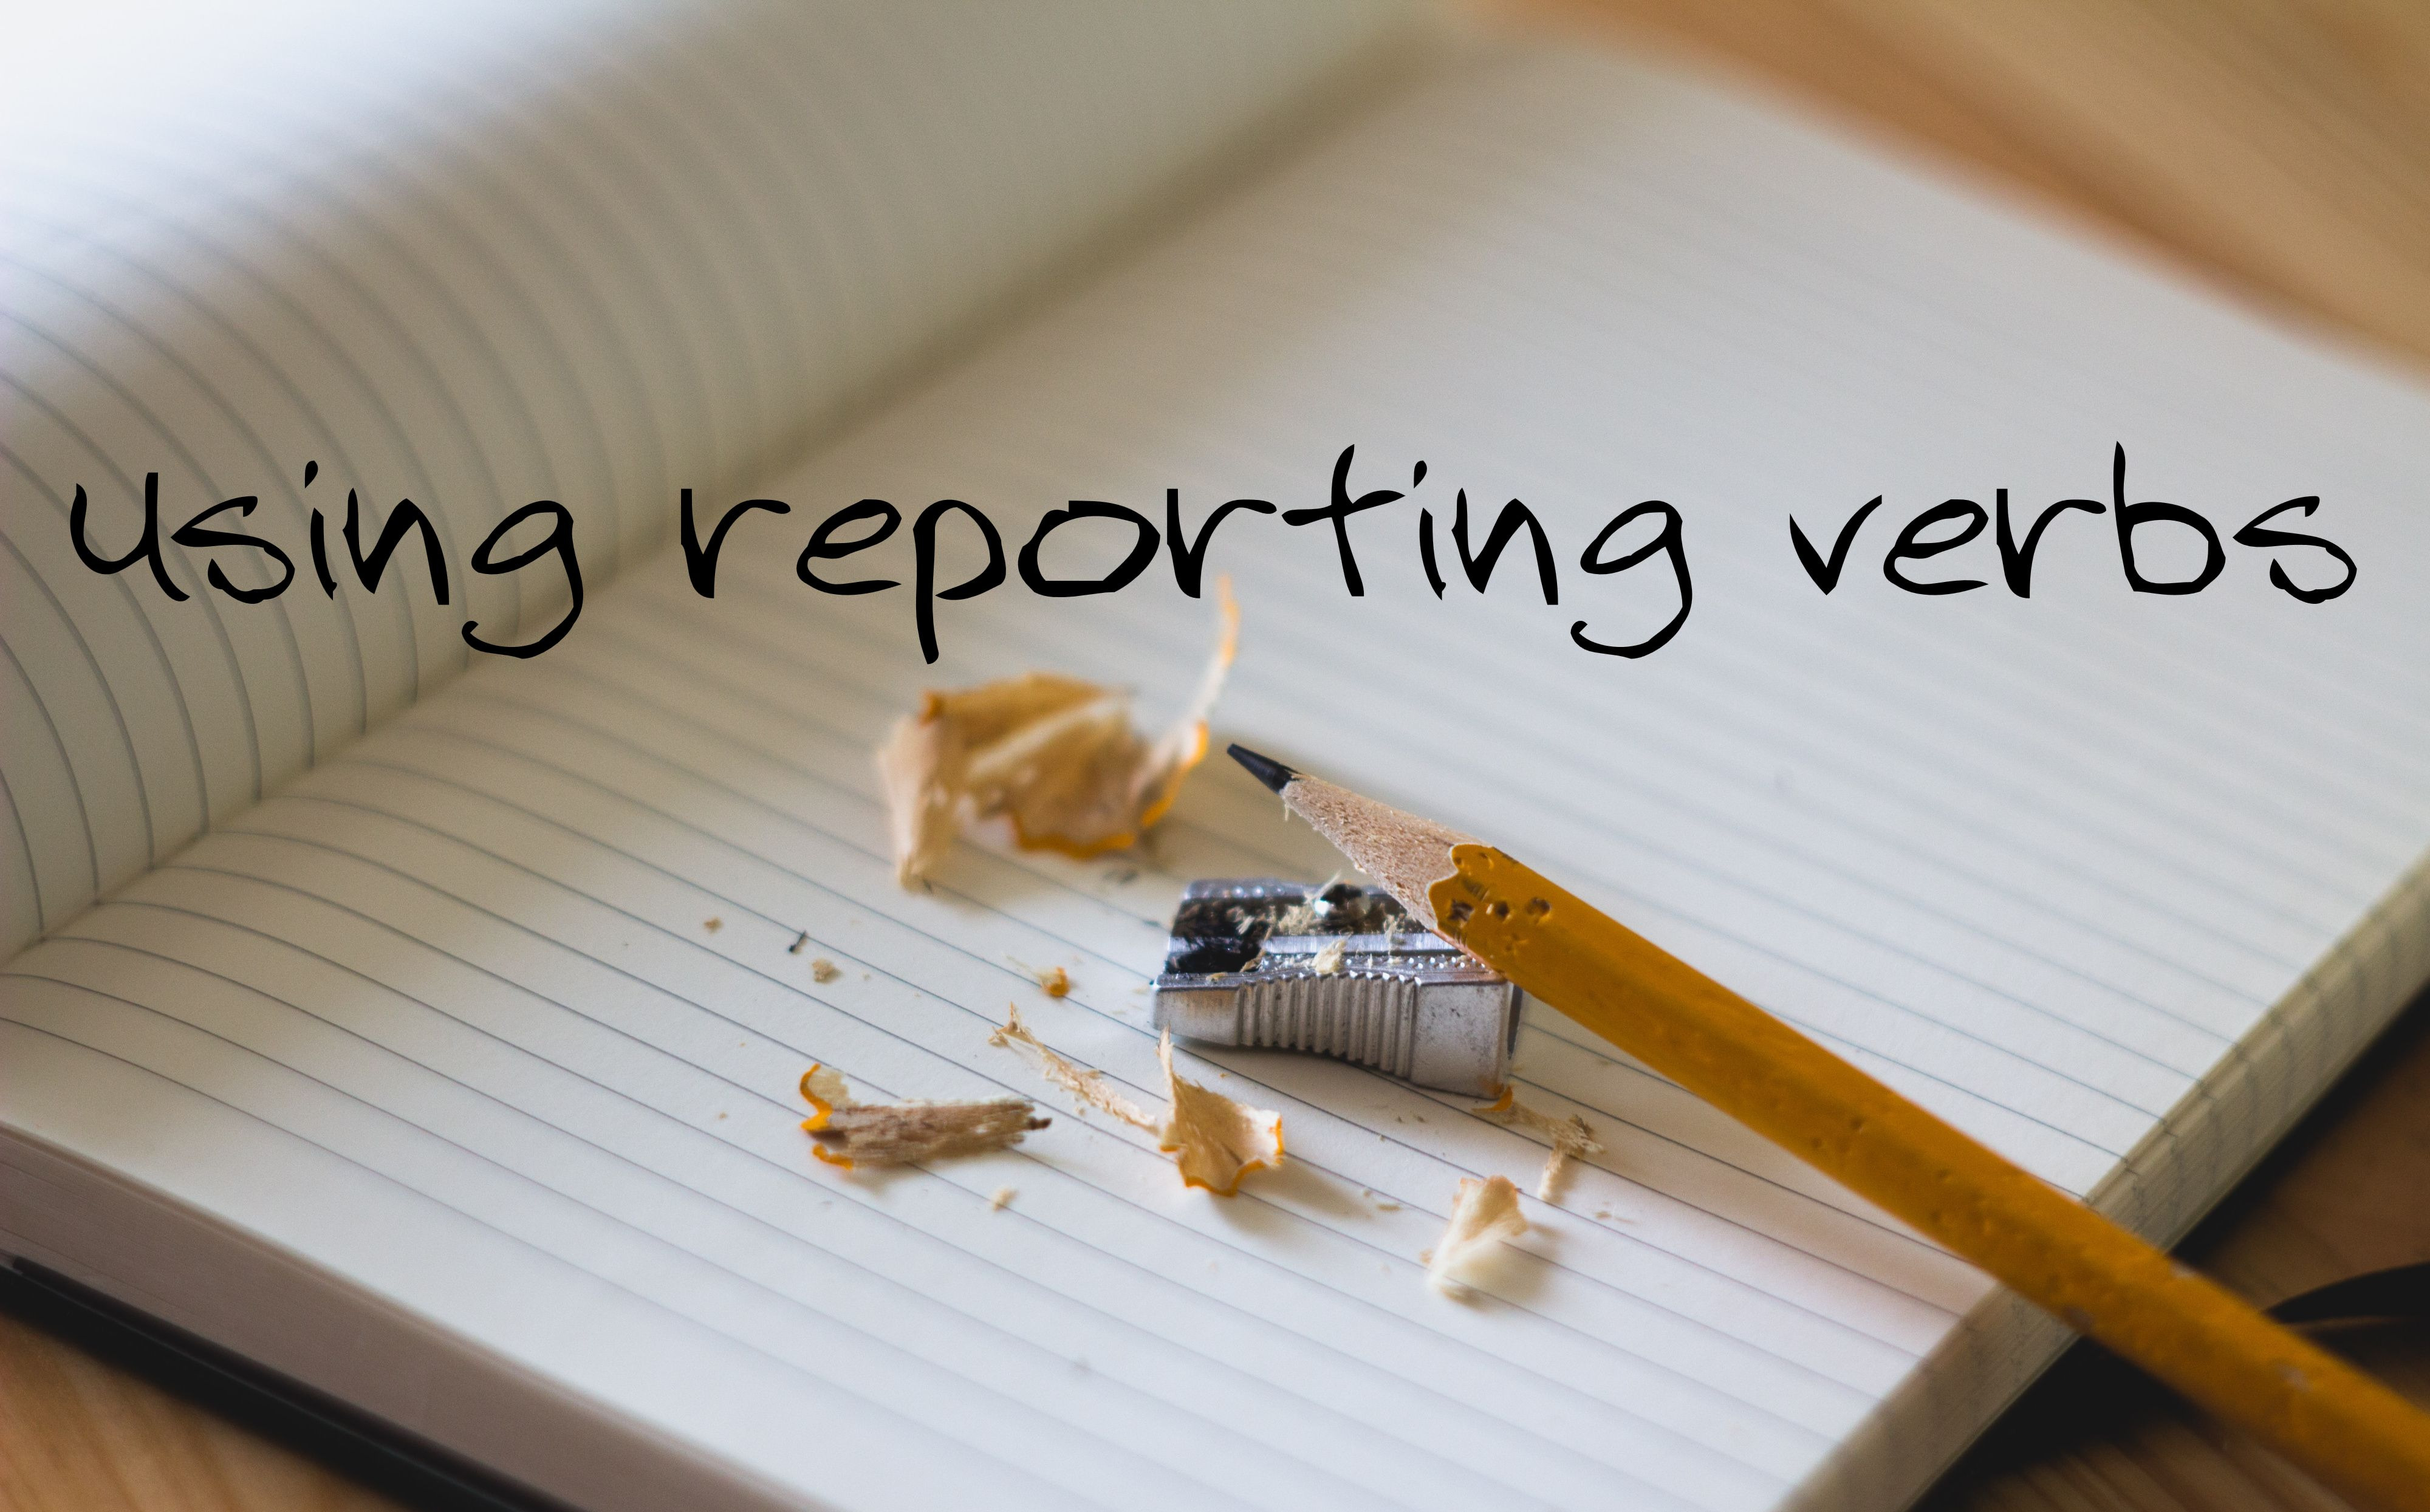 Using reporting verbs